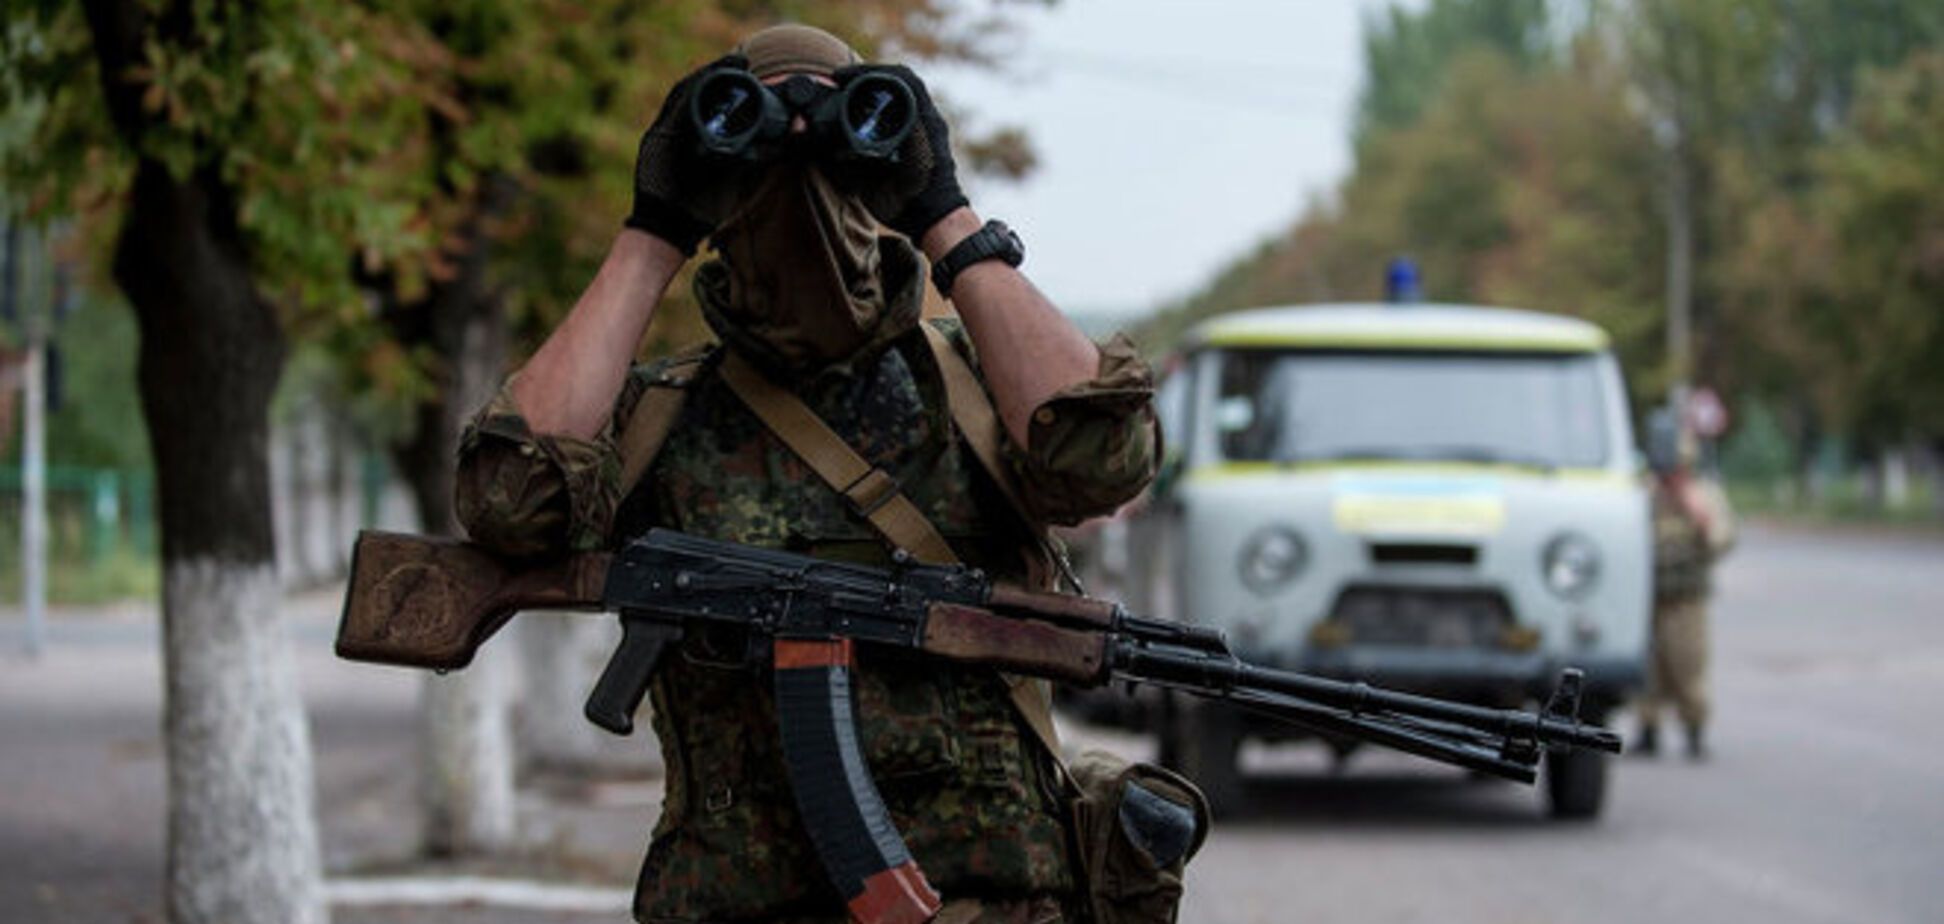 Линия фронта сил АТО переместилась в пригород Донецка